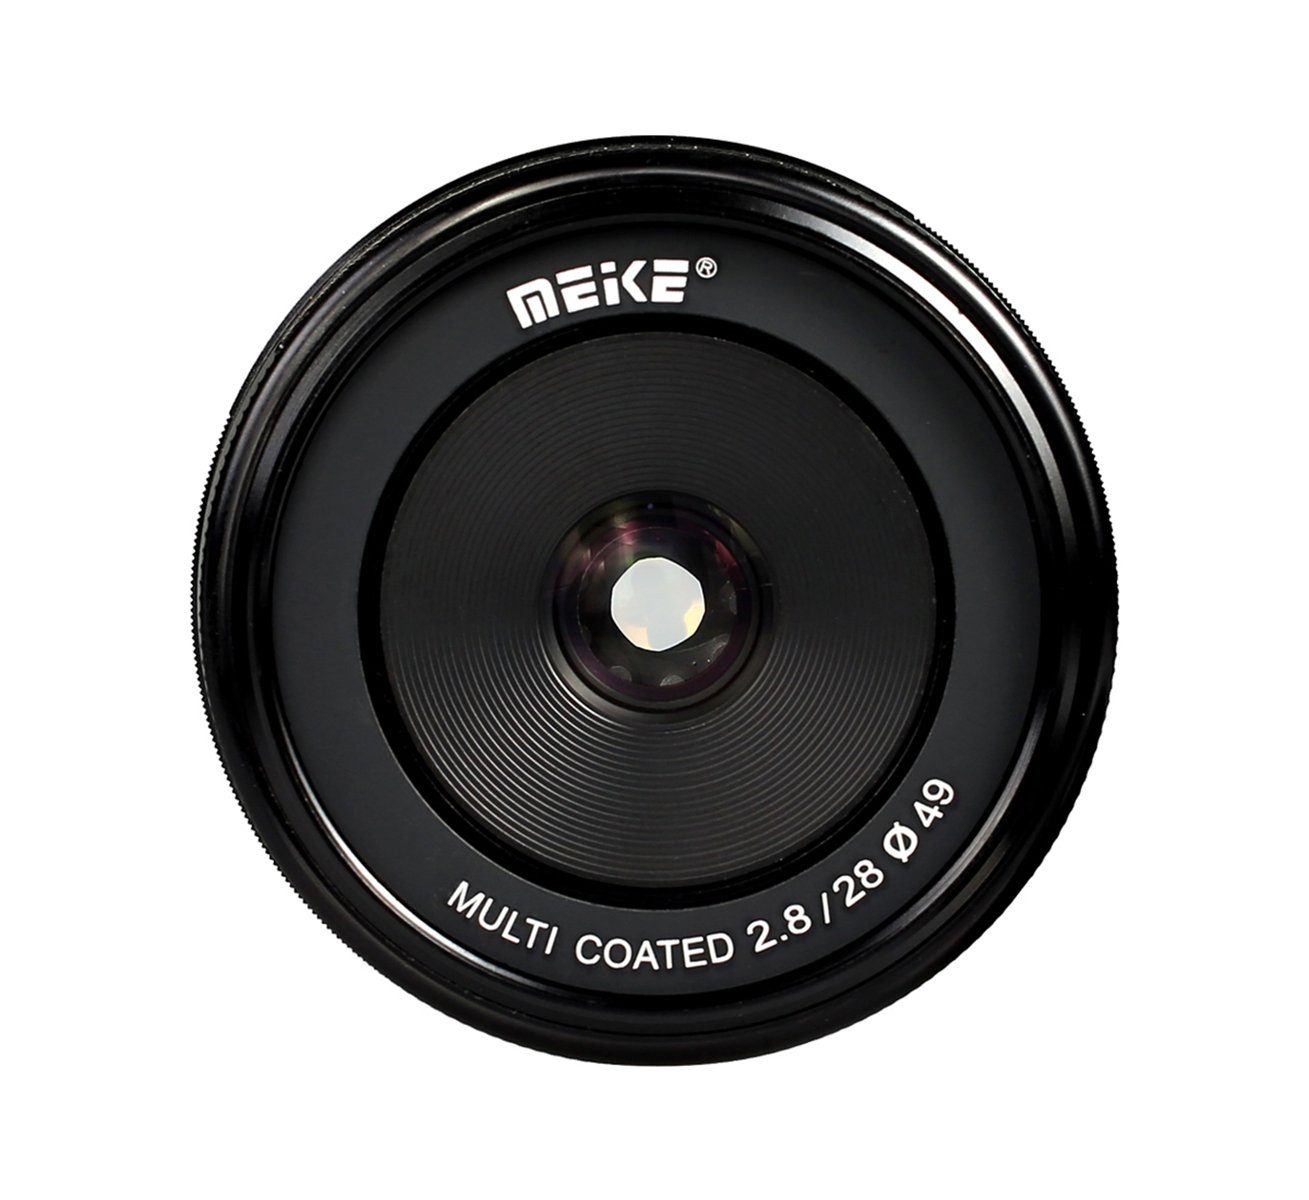 Meike Meike F2.8 Objektiv Micro für 28mm Objektiv multicoated 4/3